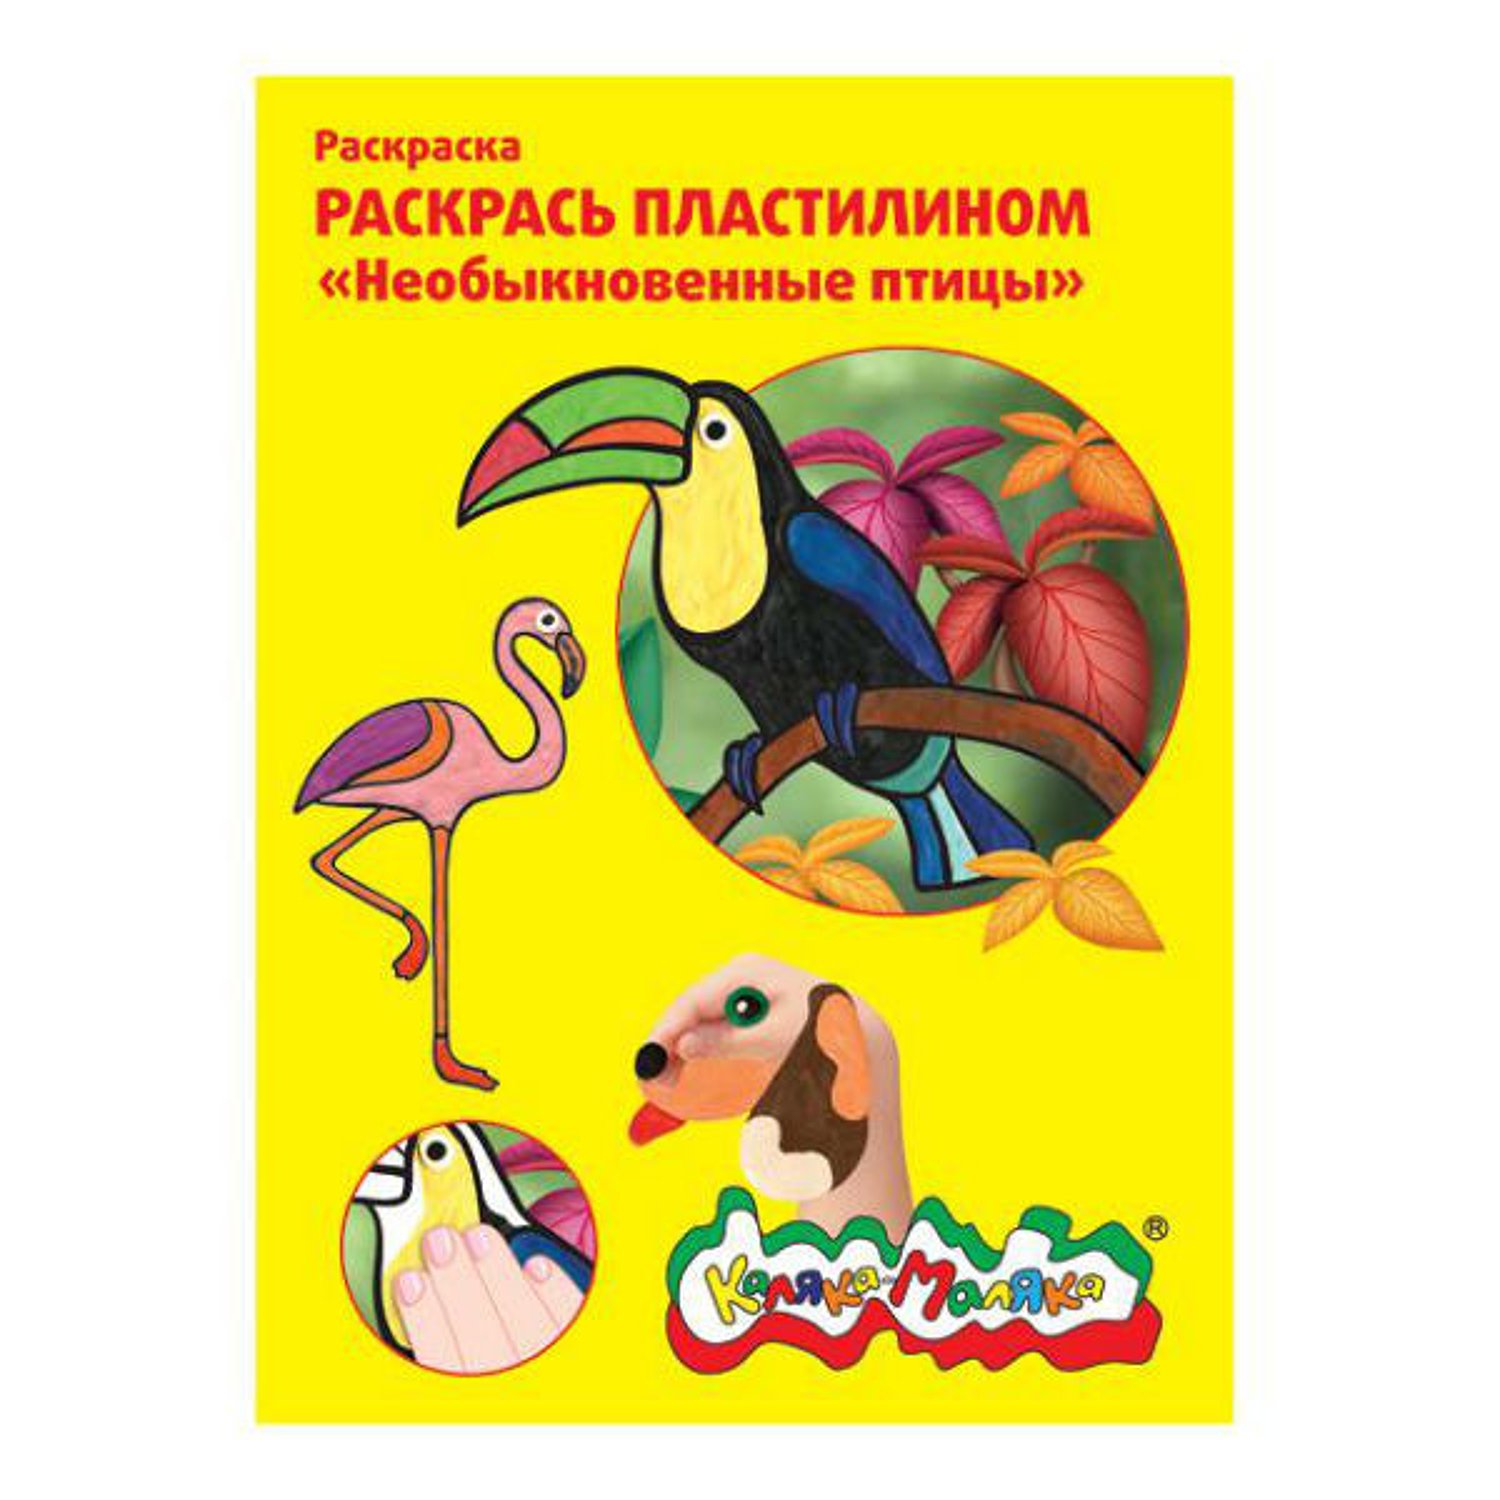 Раскраска пластилином Каляка Маляка необыкновенные птицы